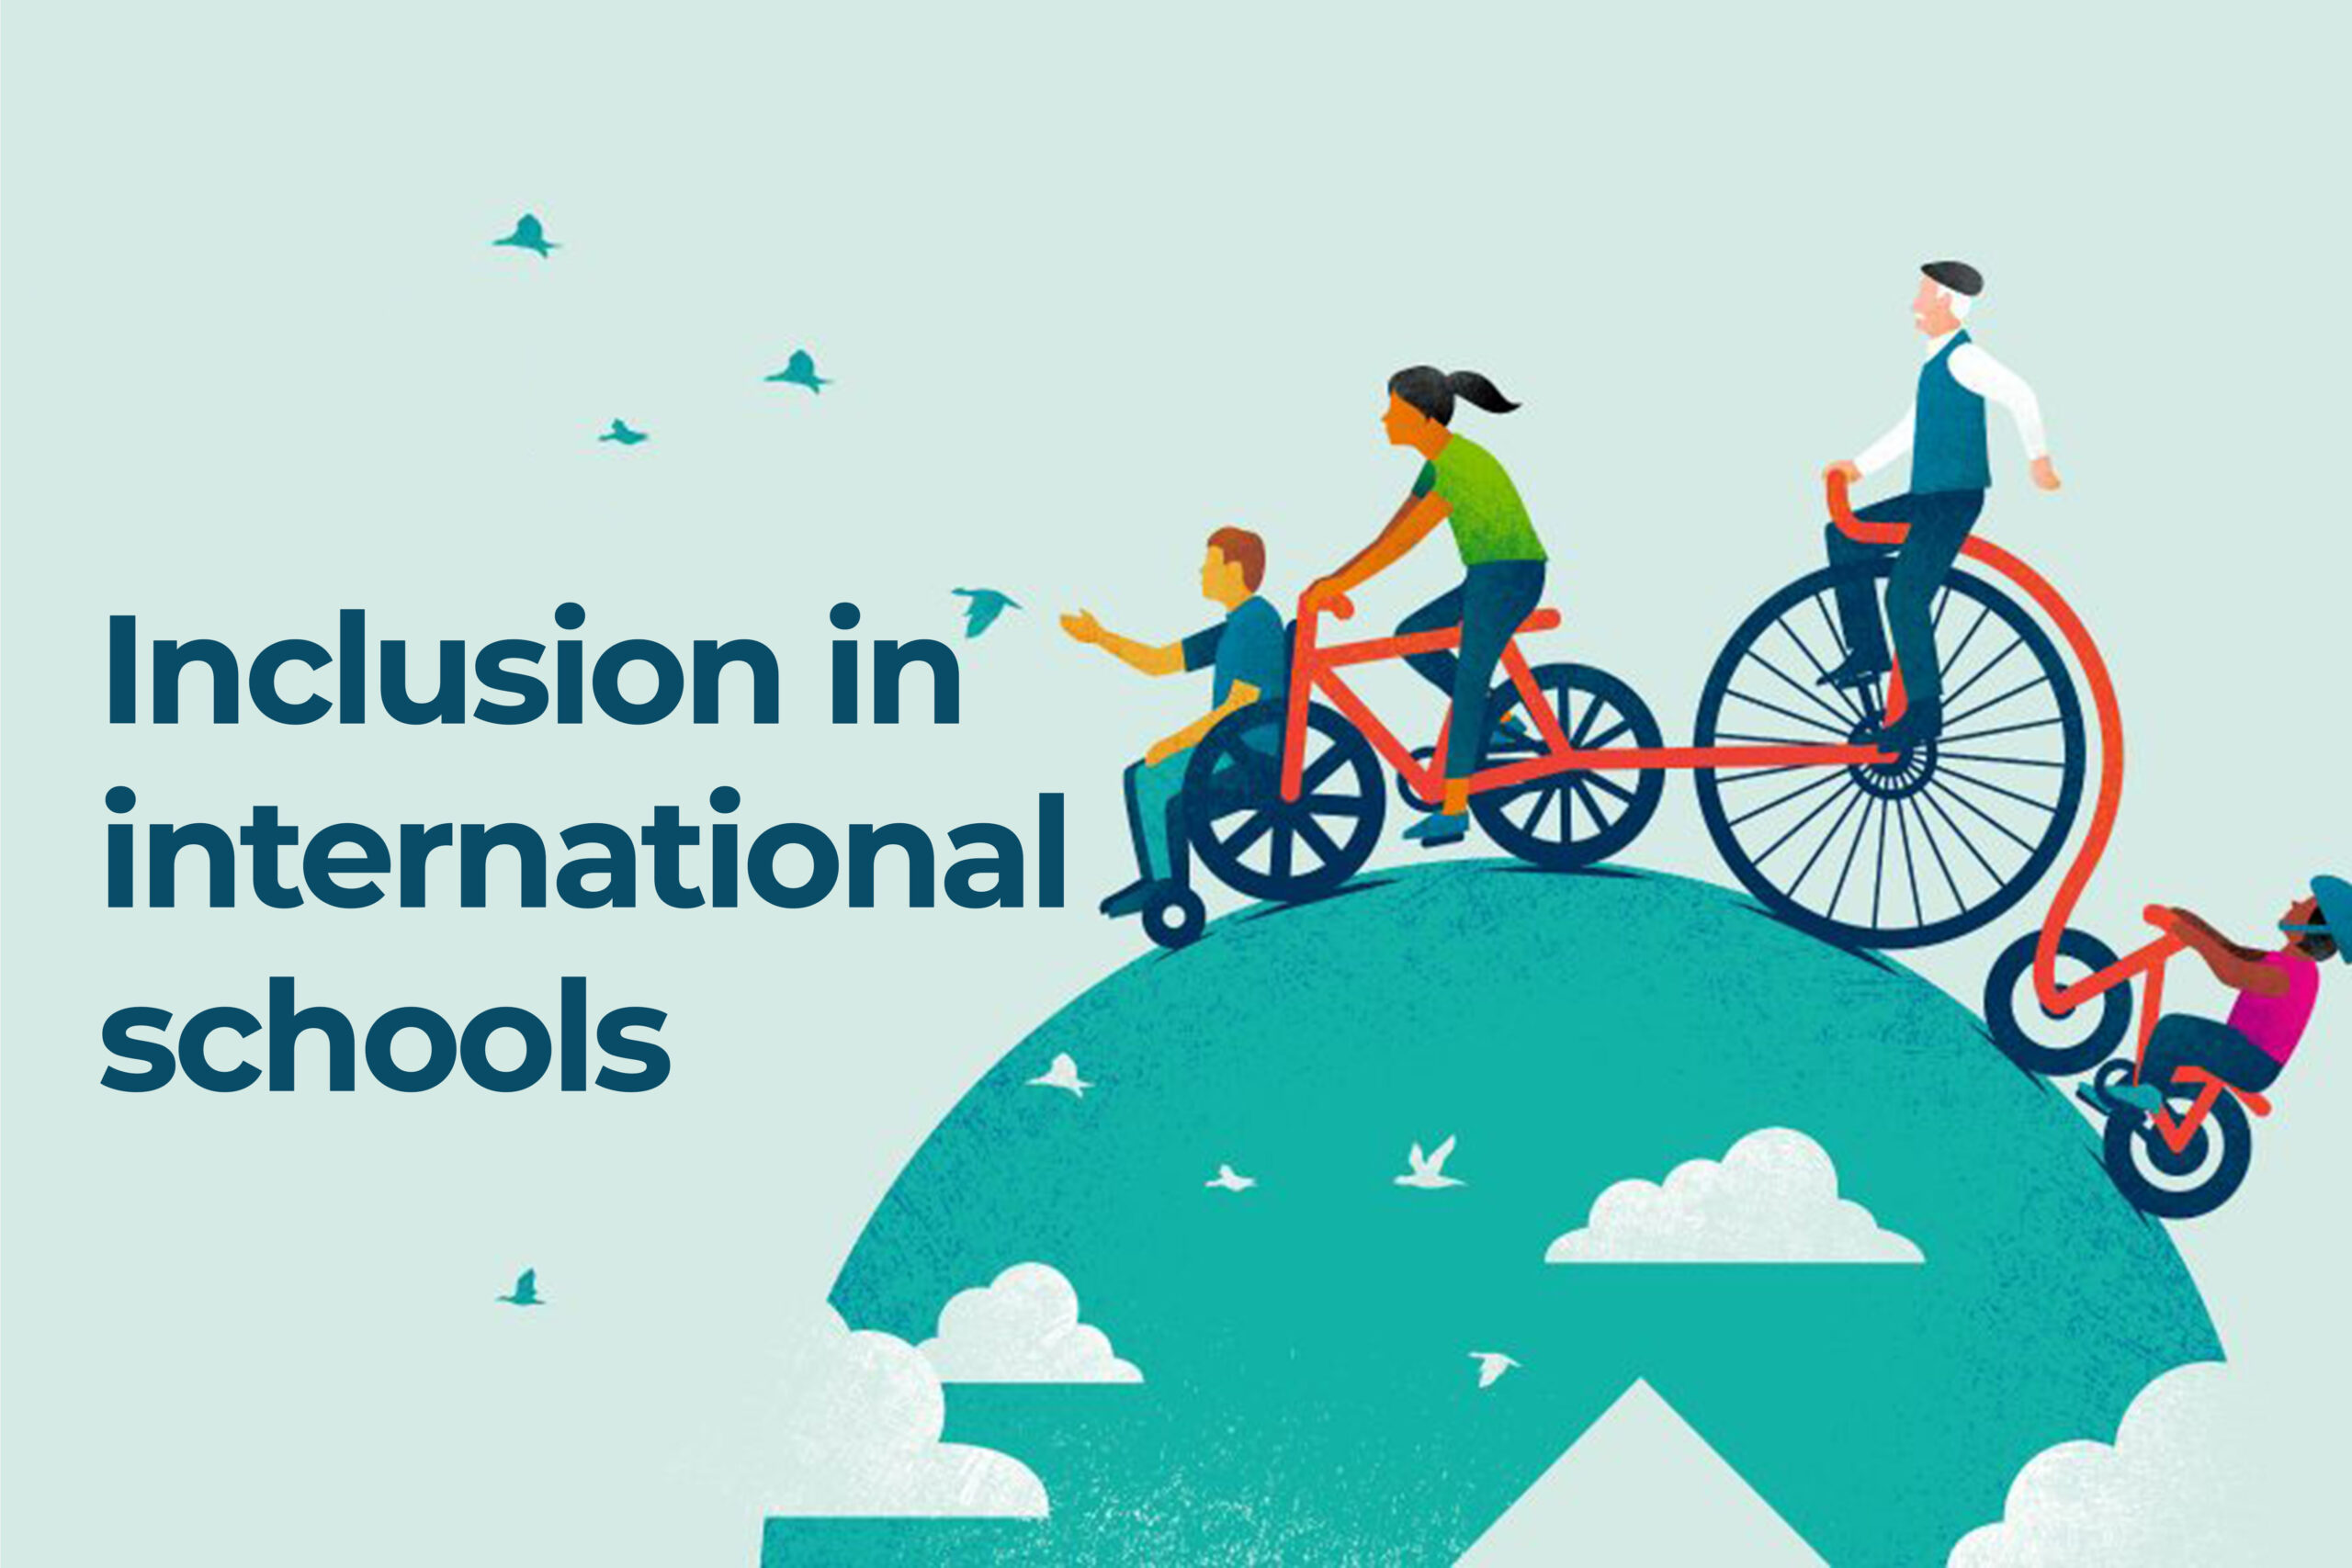 Inclusion in international schools